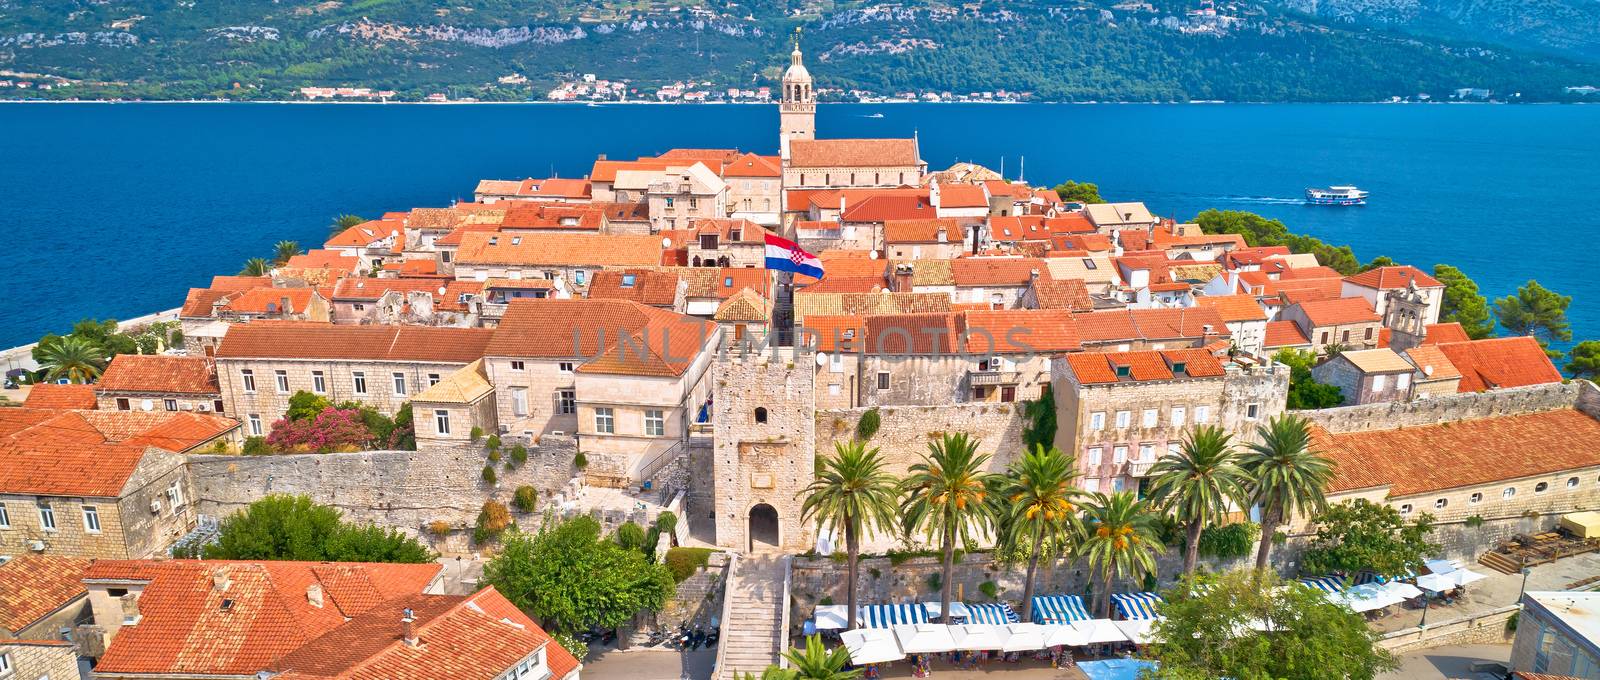 Korcula. Panoramic view of Korcula town gate and historic architecture. Island in south Dalmatia archipelago of Croatia